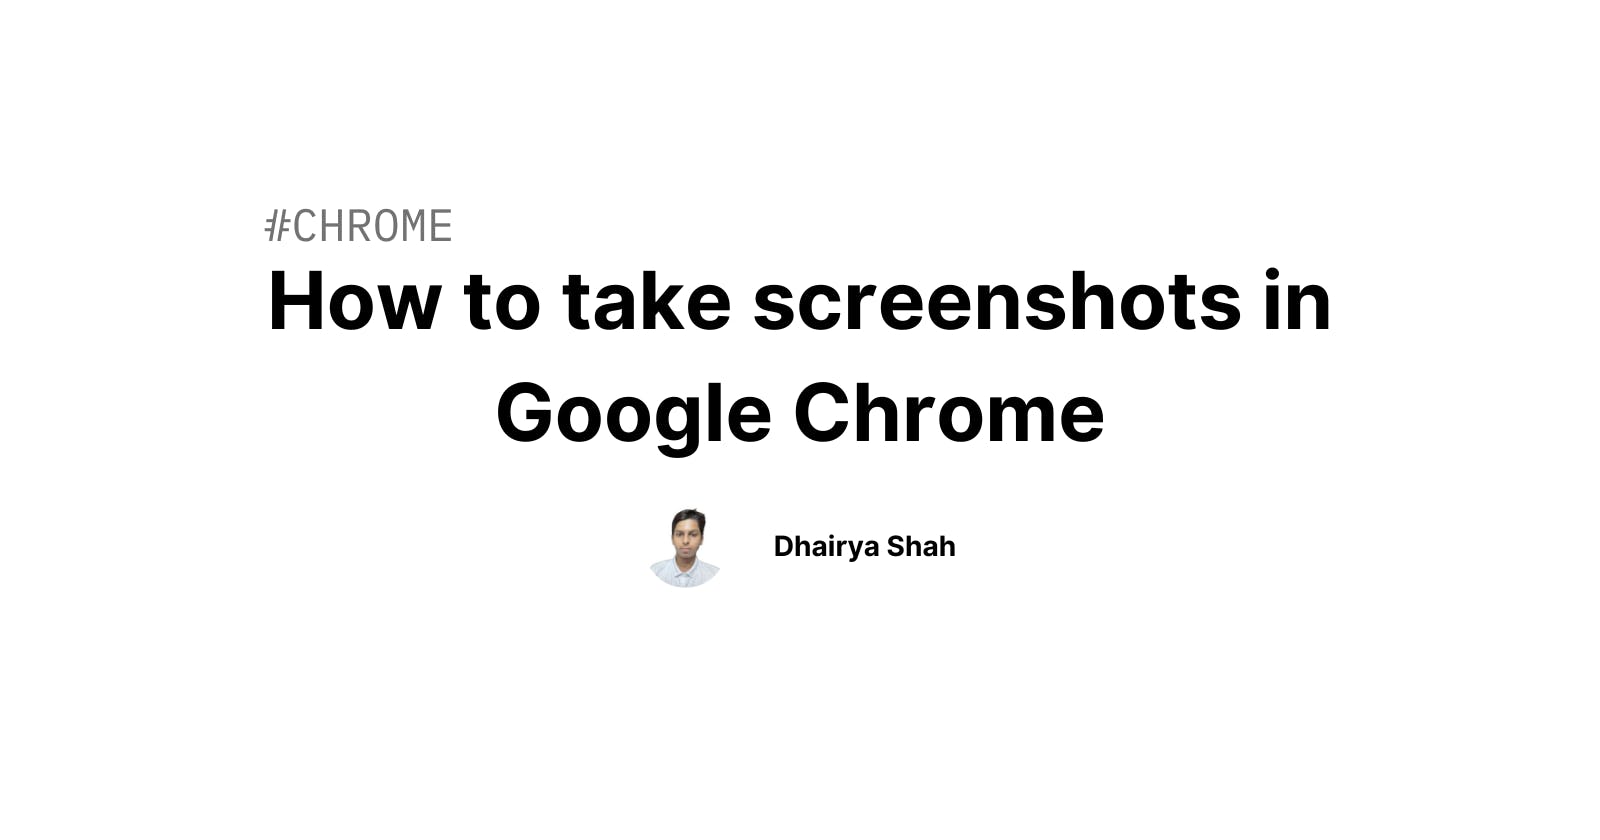 How to take screenshots in Google Chrome